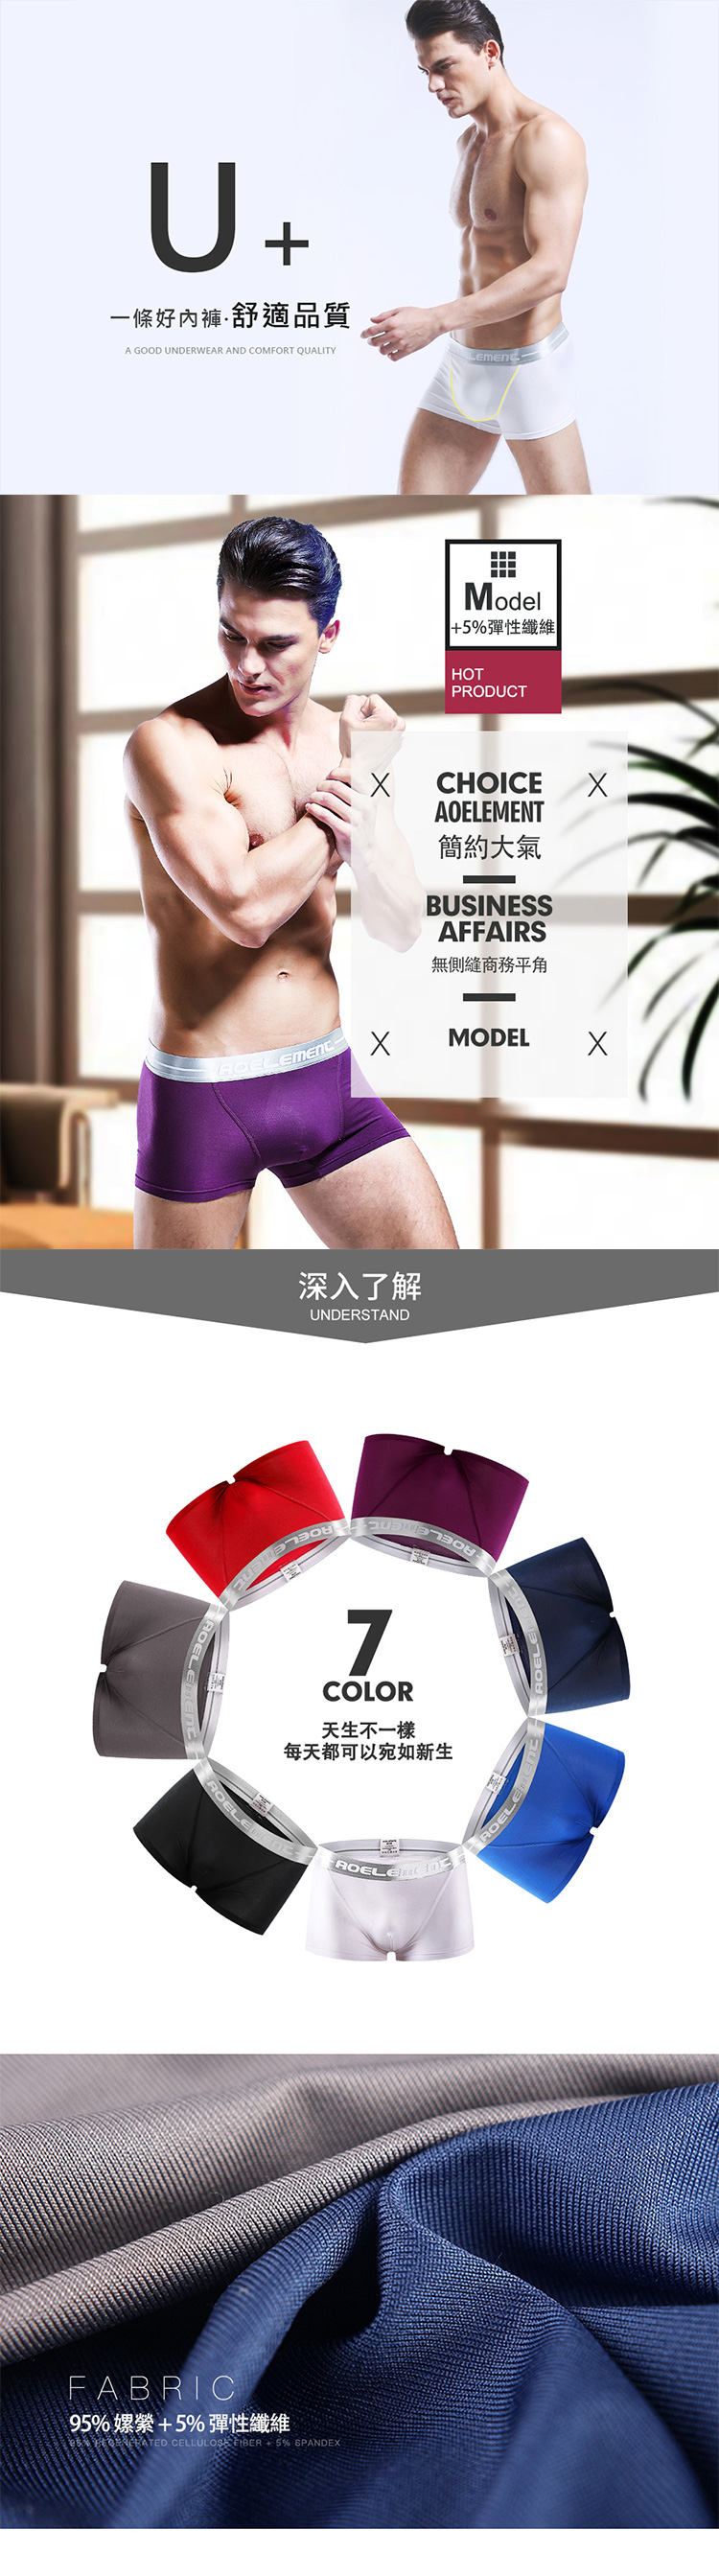       【HENIS】紳士風格簡約透氣四角褲_買3送3超值6件組(無側縫冰